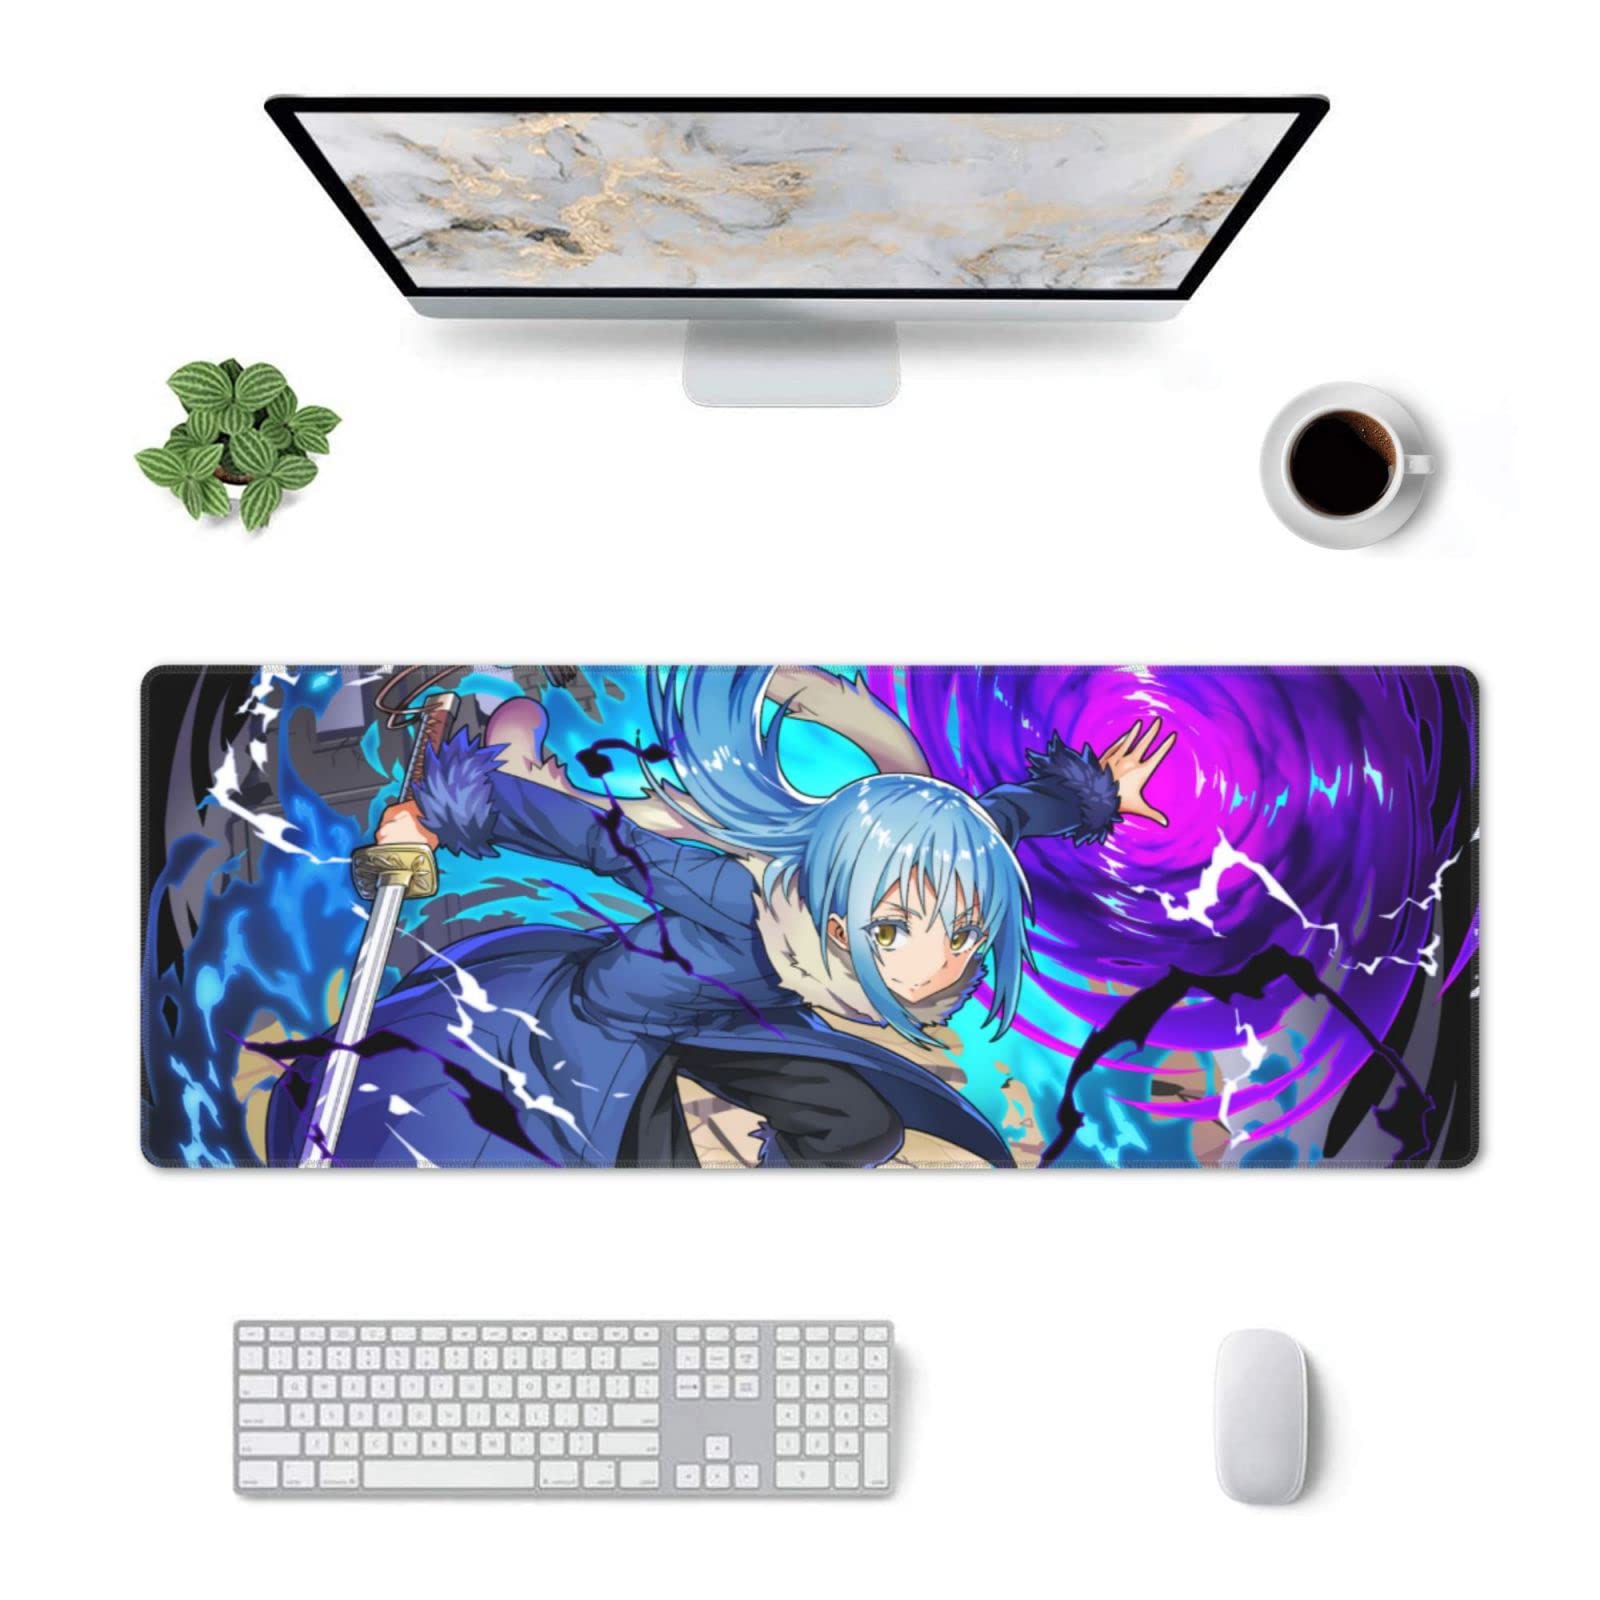 Anime Mousepads - World of Anime Desk Pads